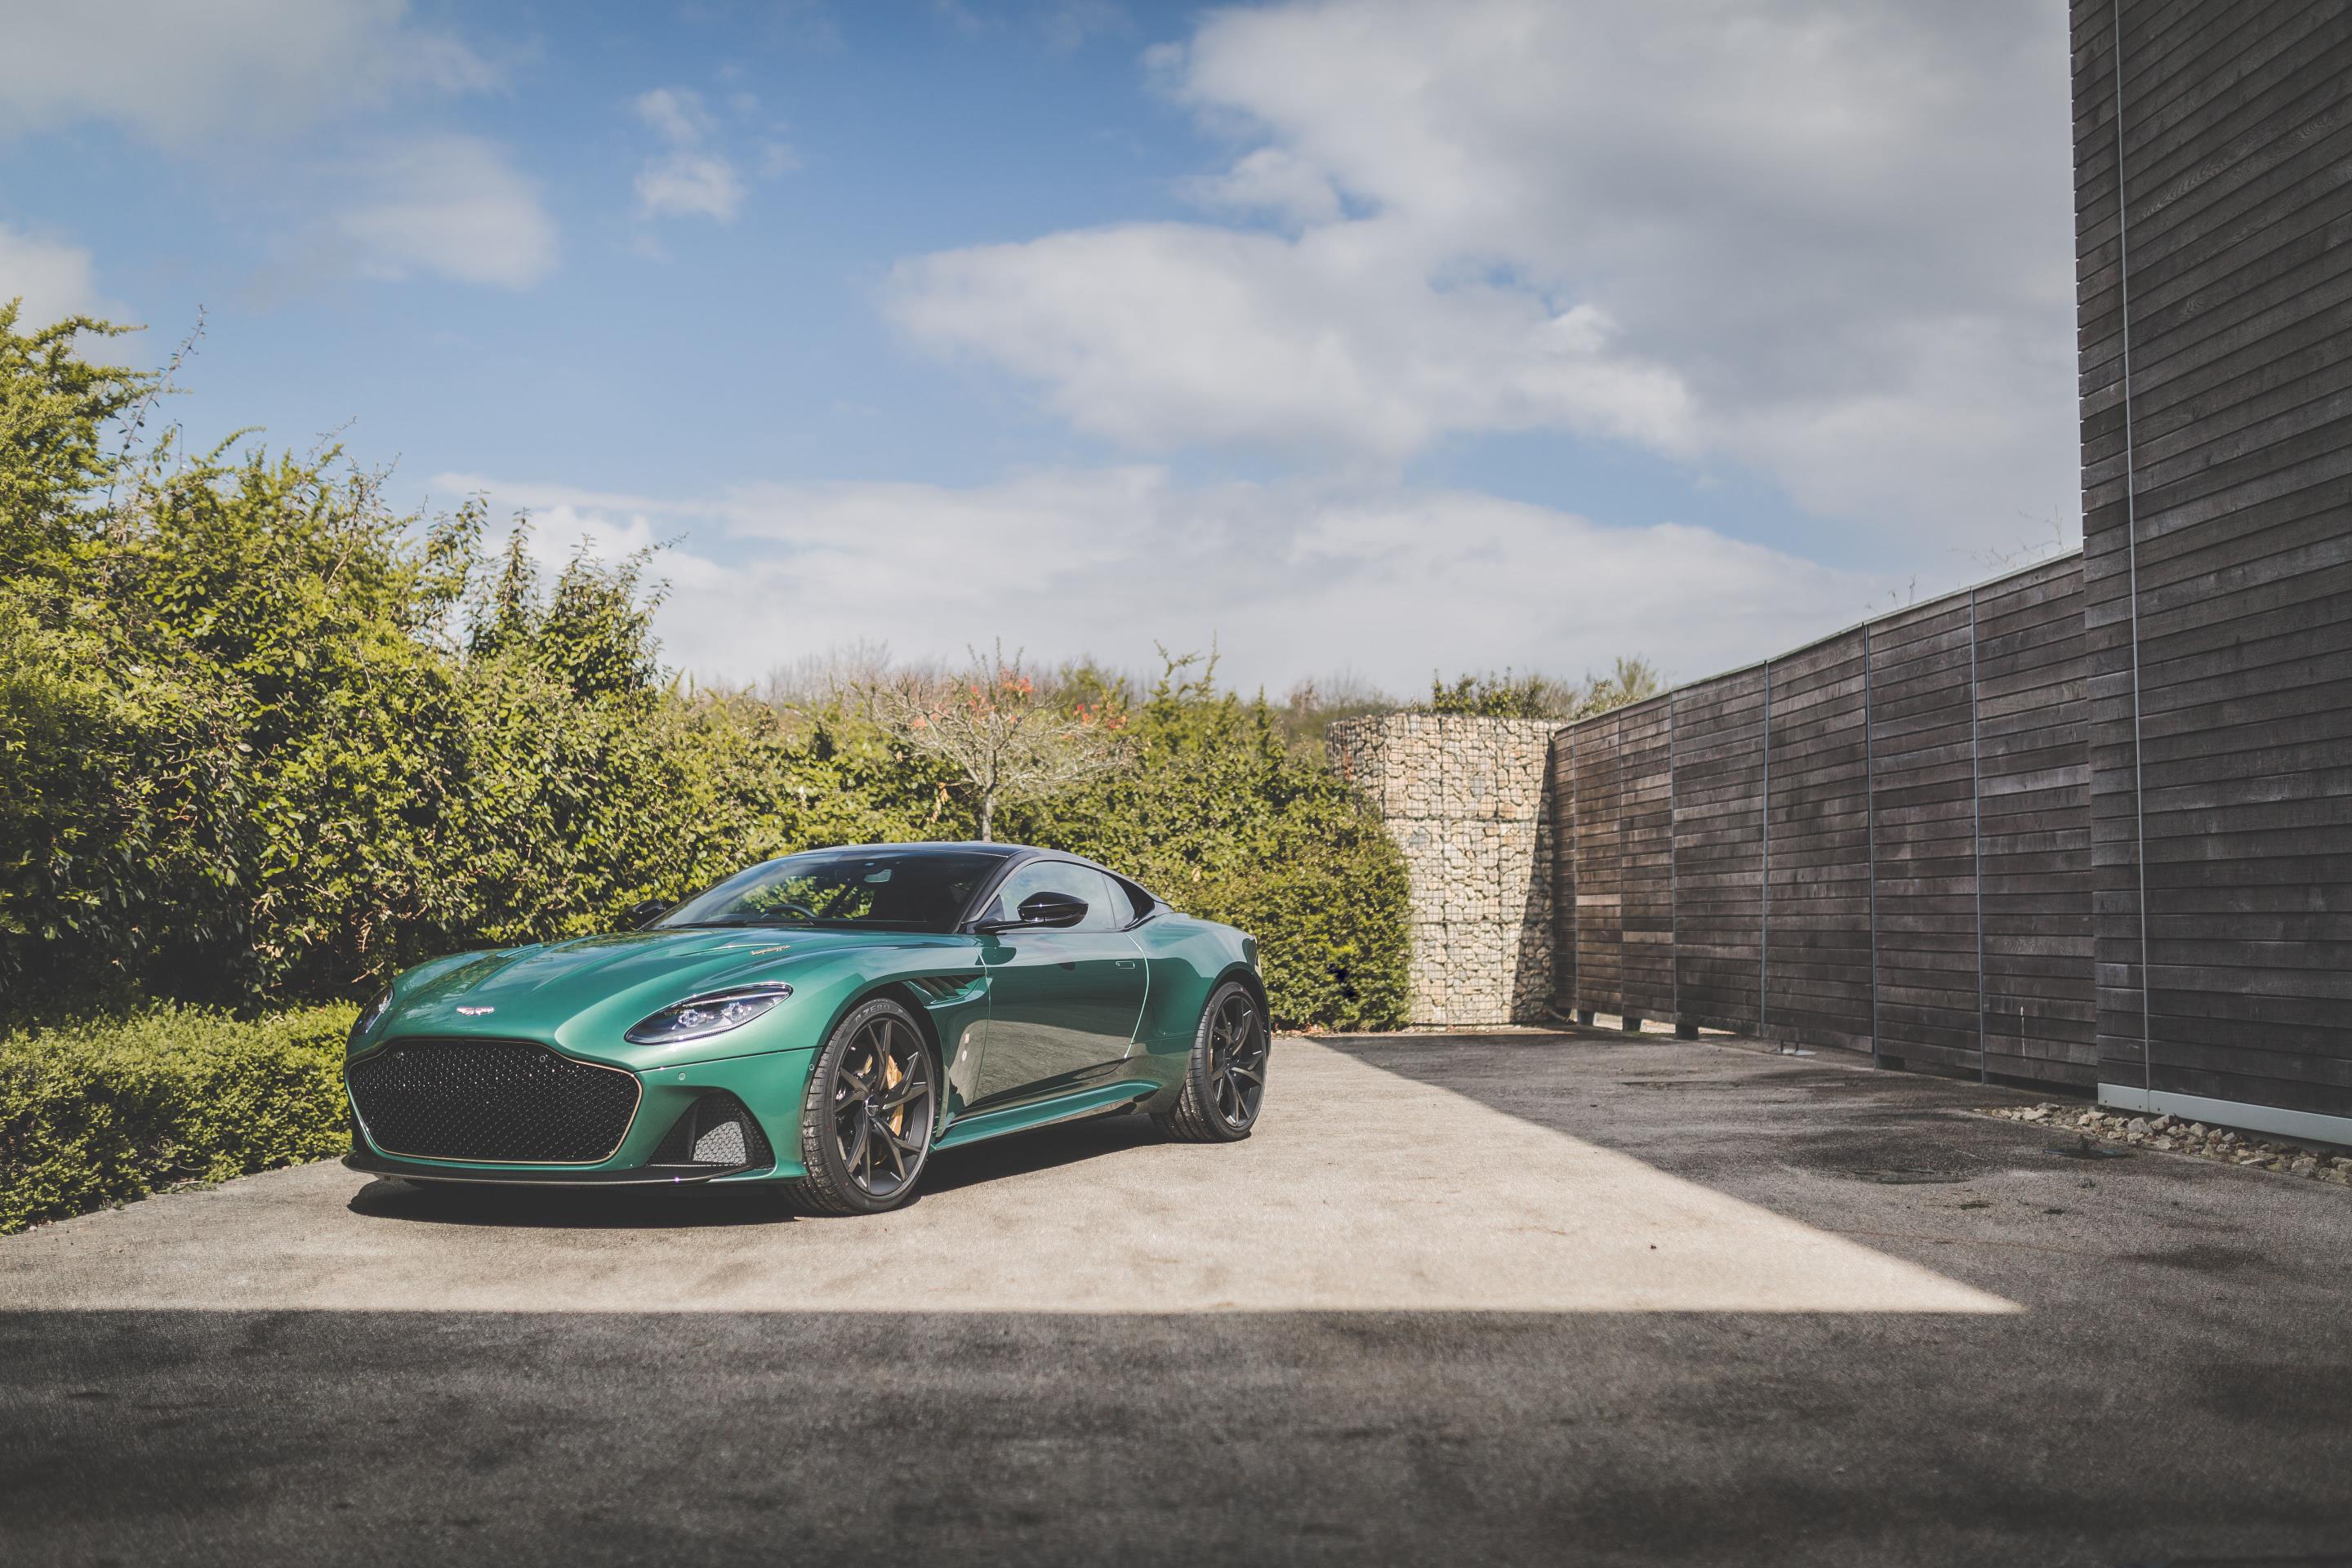 The Astonishing 2019 Aston Martin DBS 59